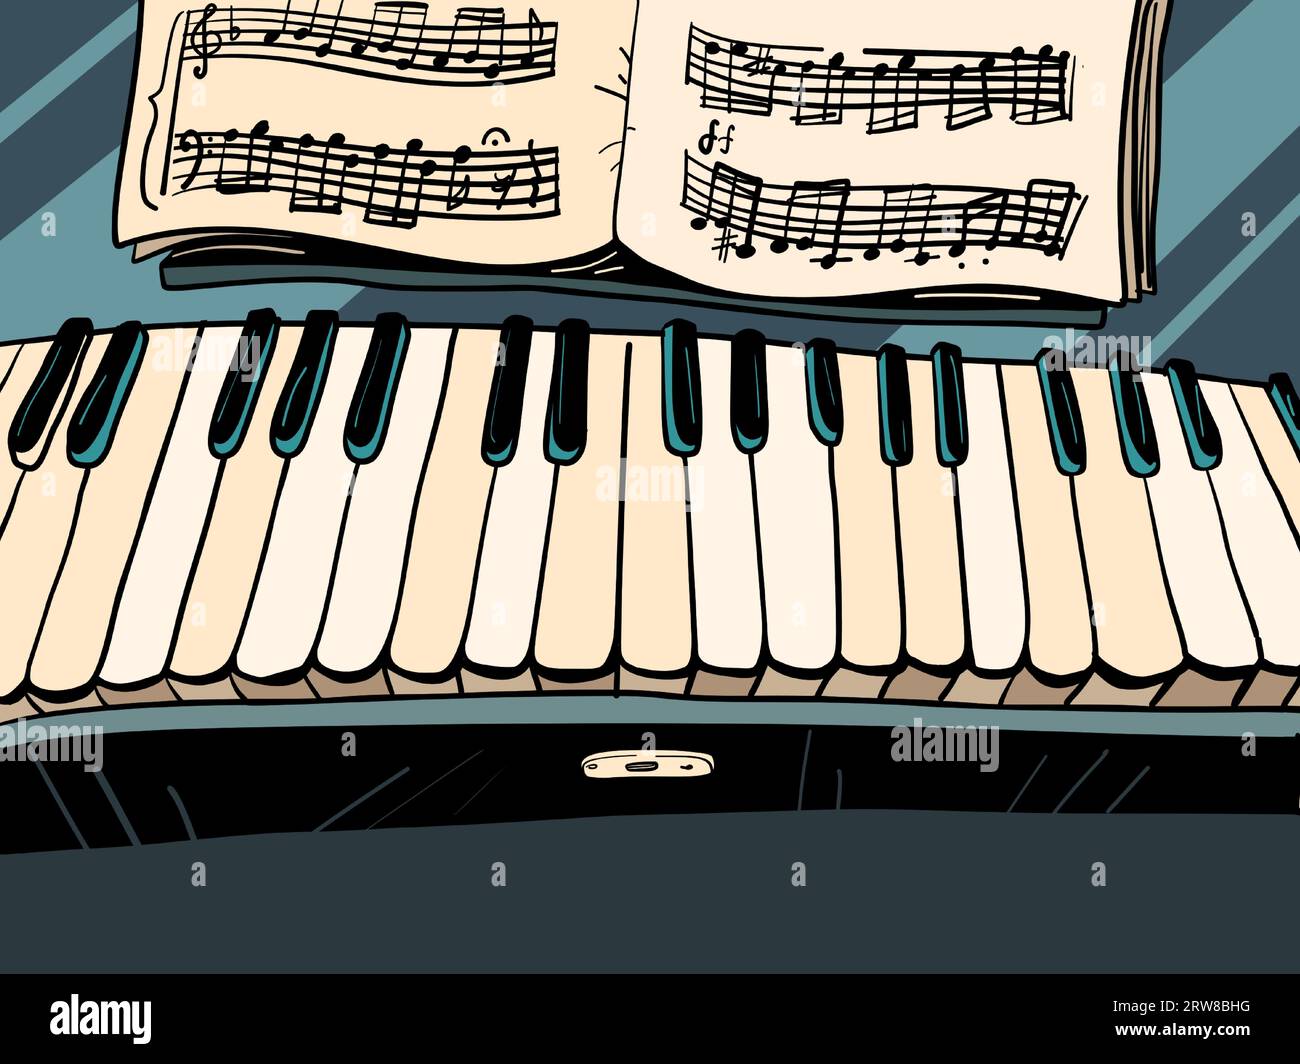 Musica clasica para piano fotografías e imágenes de alta resolución - Alamy